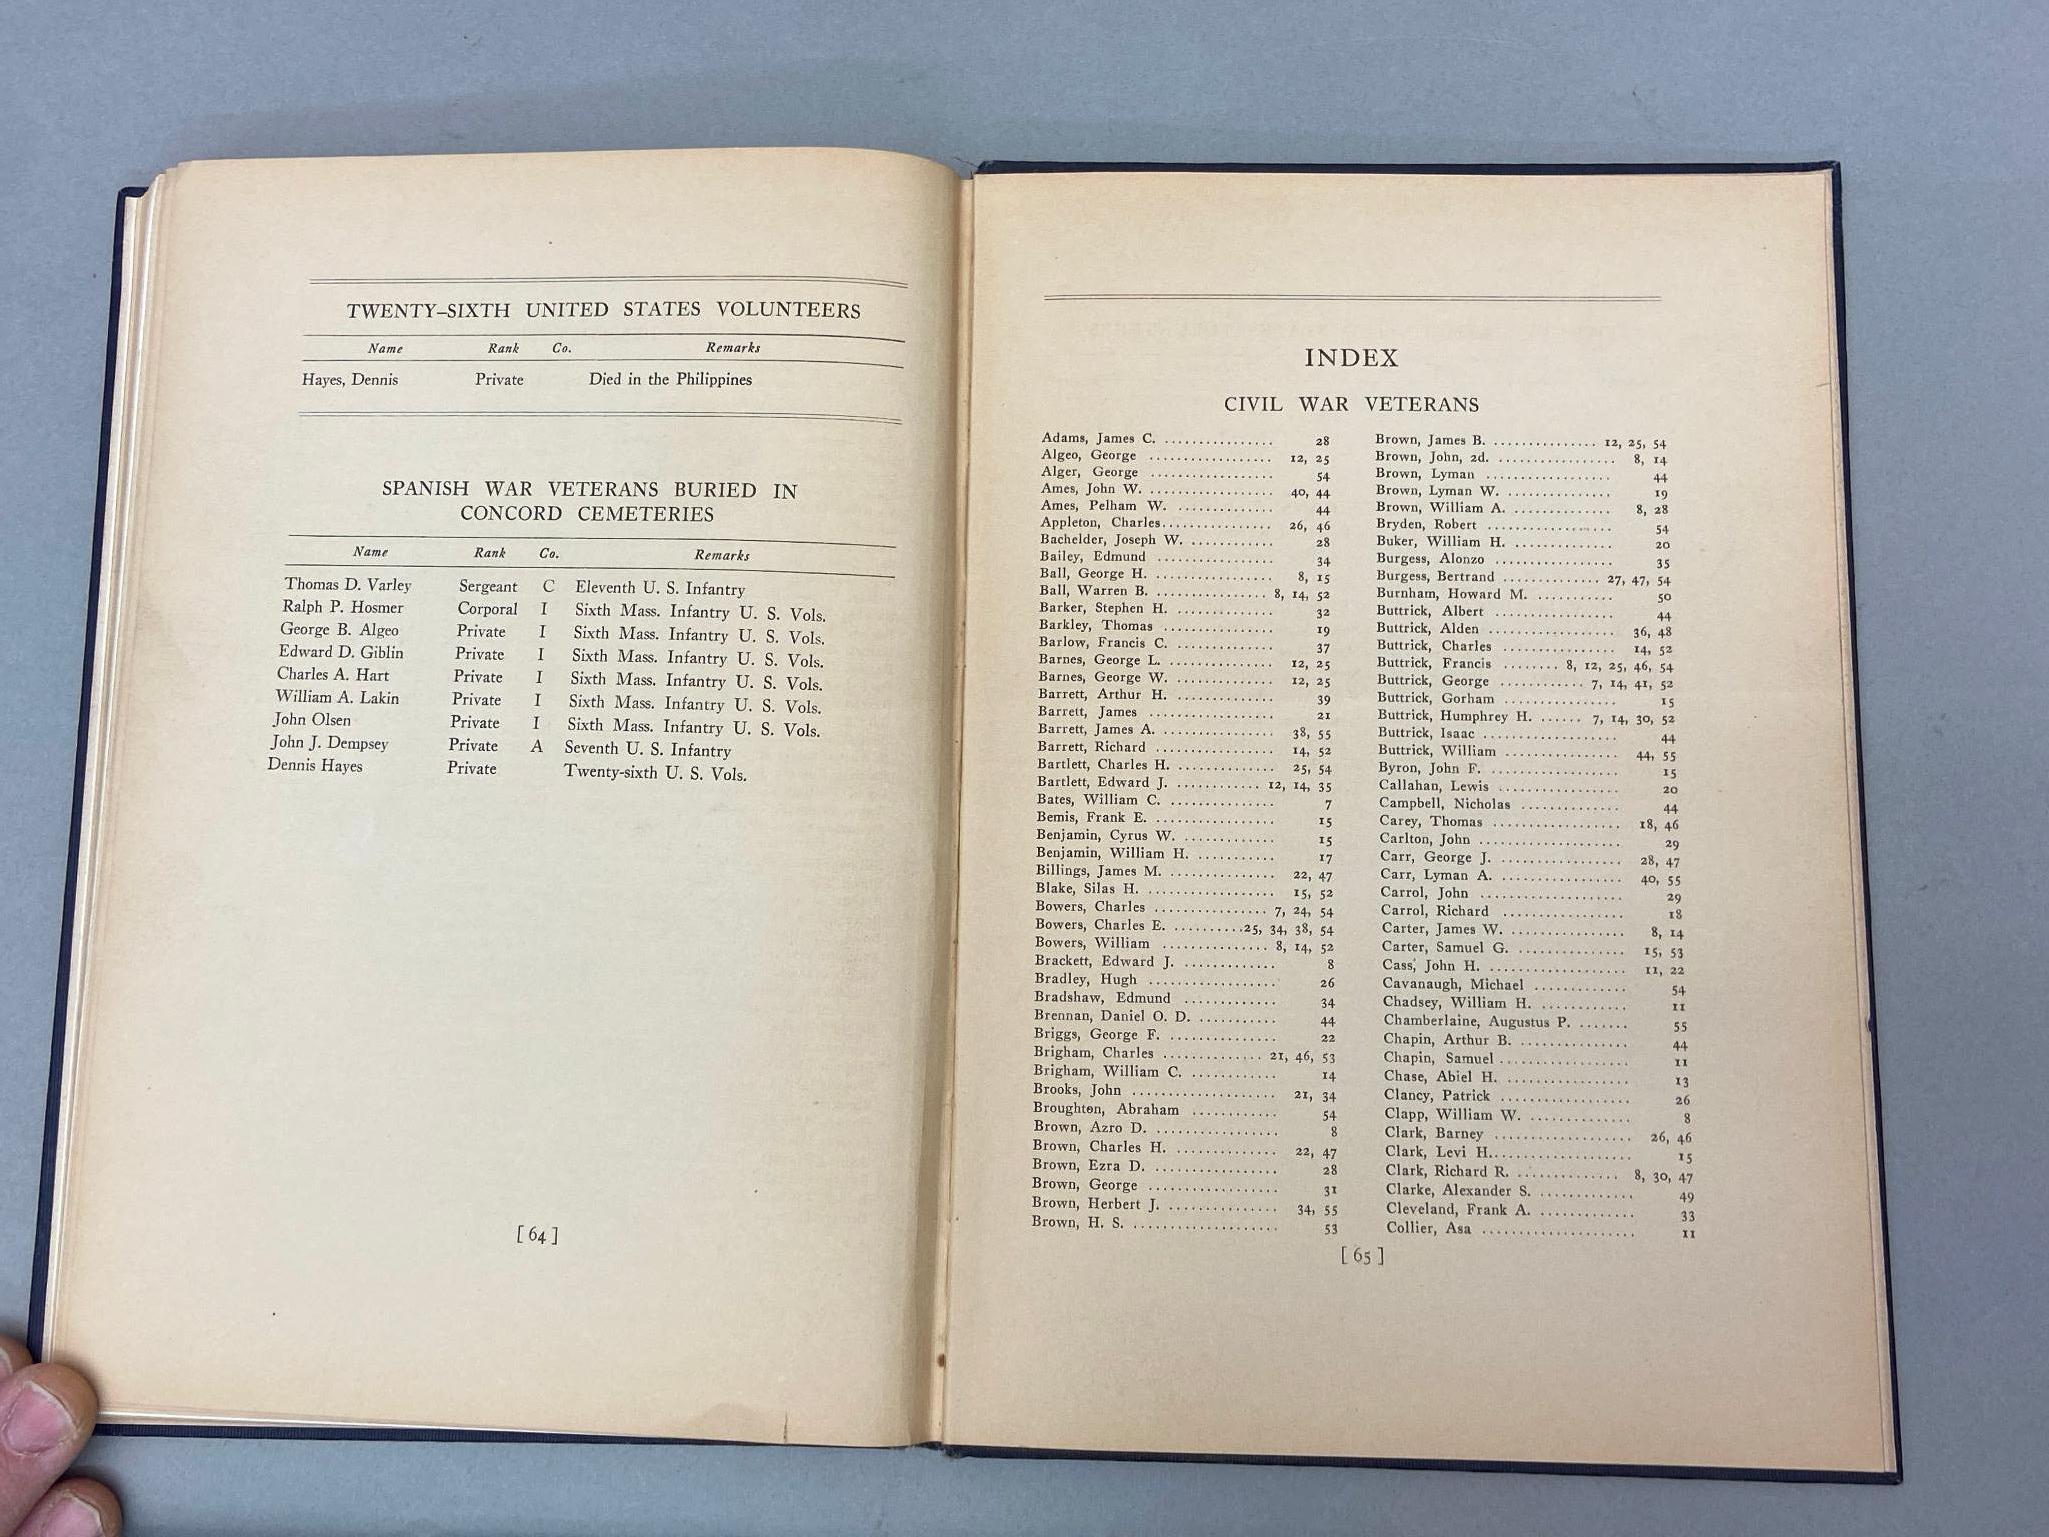 CIVIL WAR SPAN-AM ROSTER BOOK CONCORD MASS. 1908